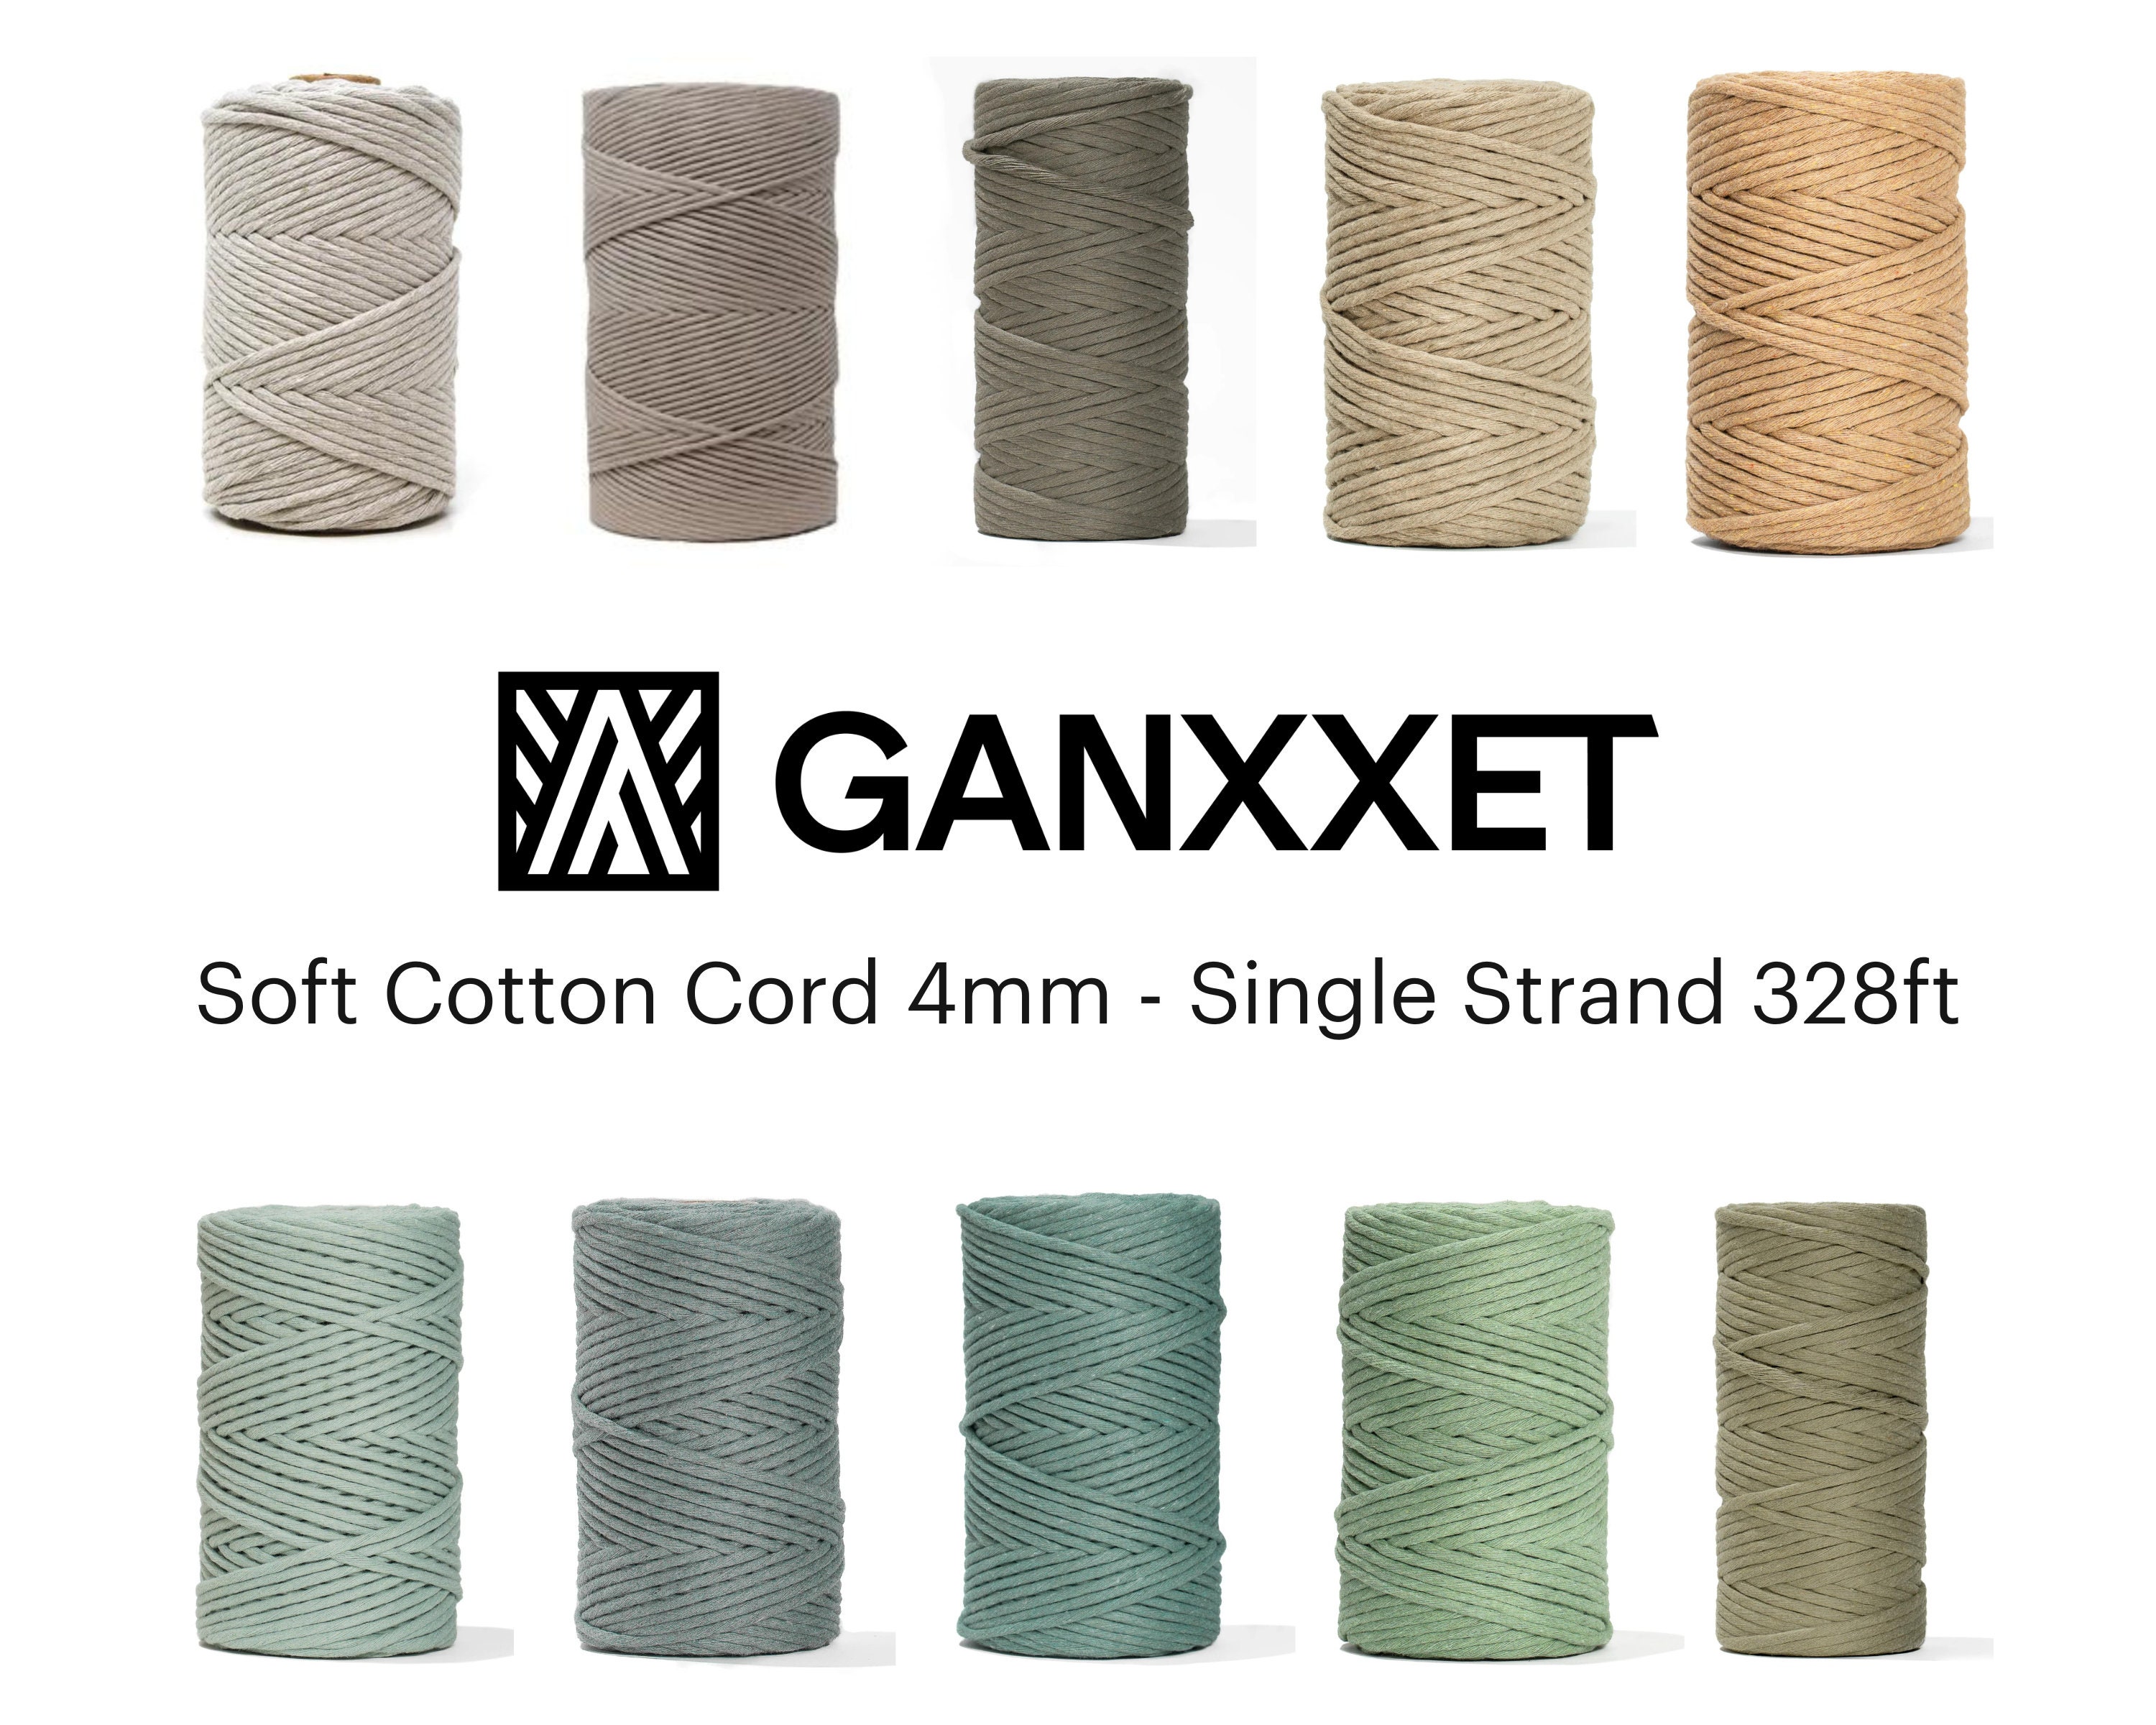 Ravenox Single Strand Twisted Cord | 100% Cotton Cord Macramé Projects 2mm x 250 Yards